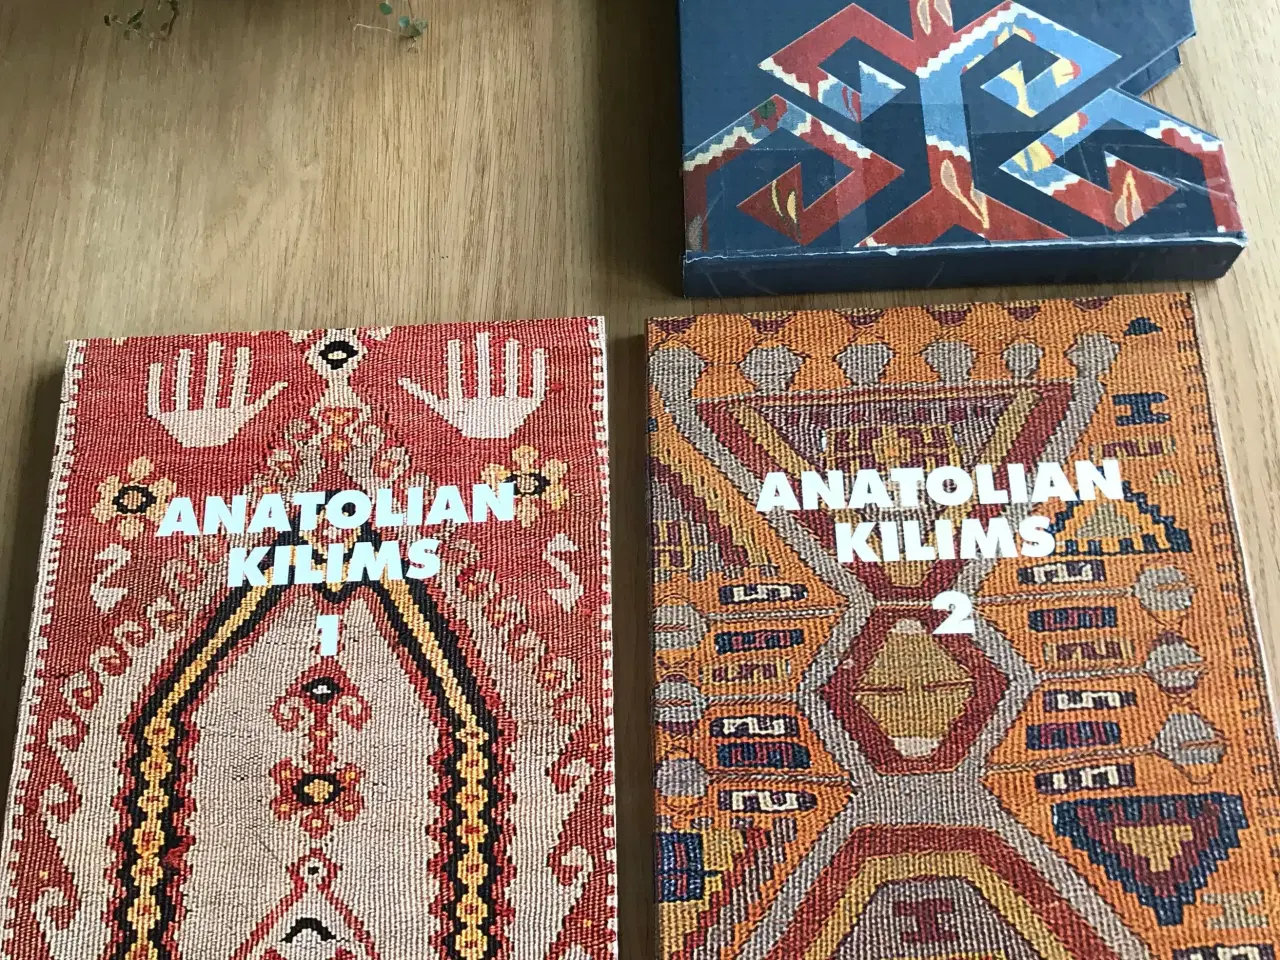 Billede 2 - Anatolian Kilims 1 og  Anatolian Kilims 2